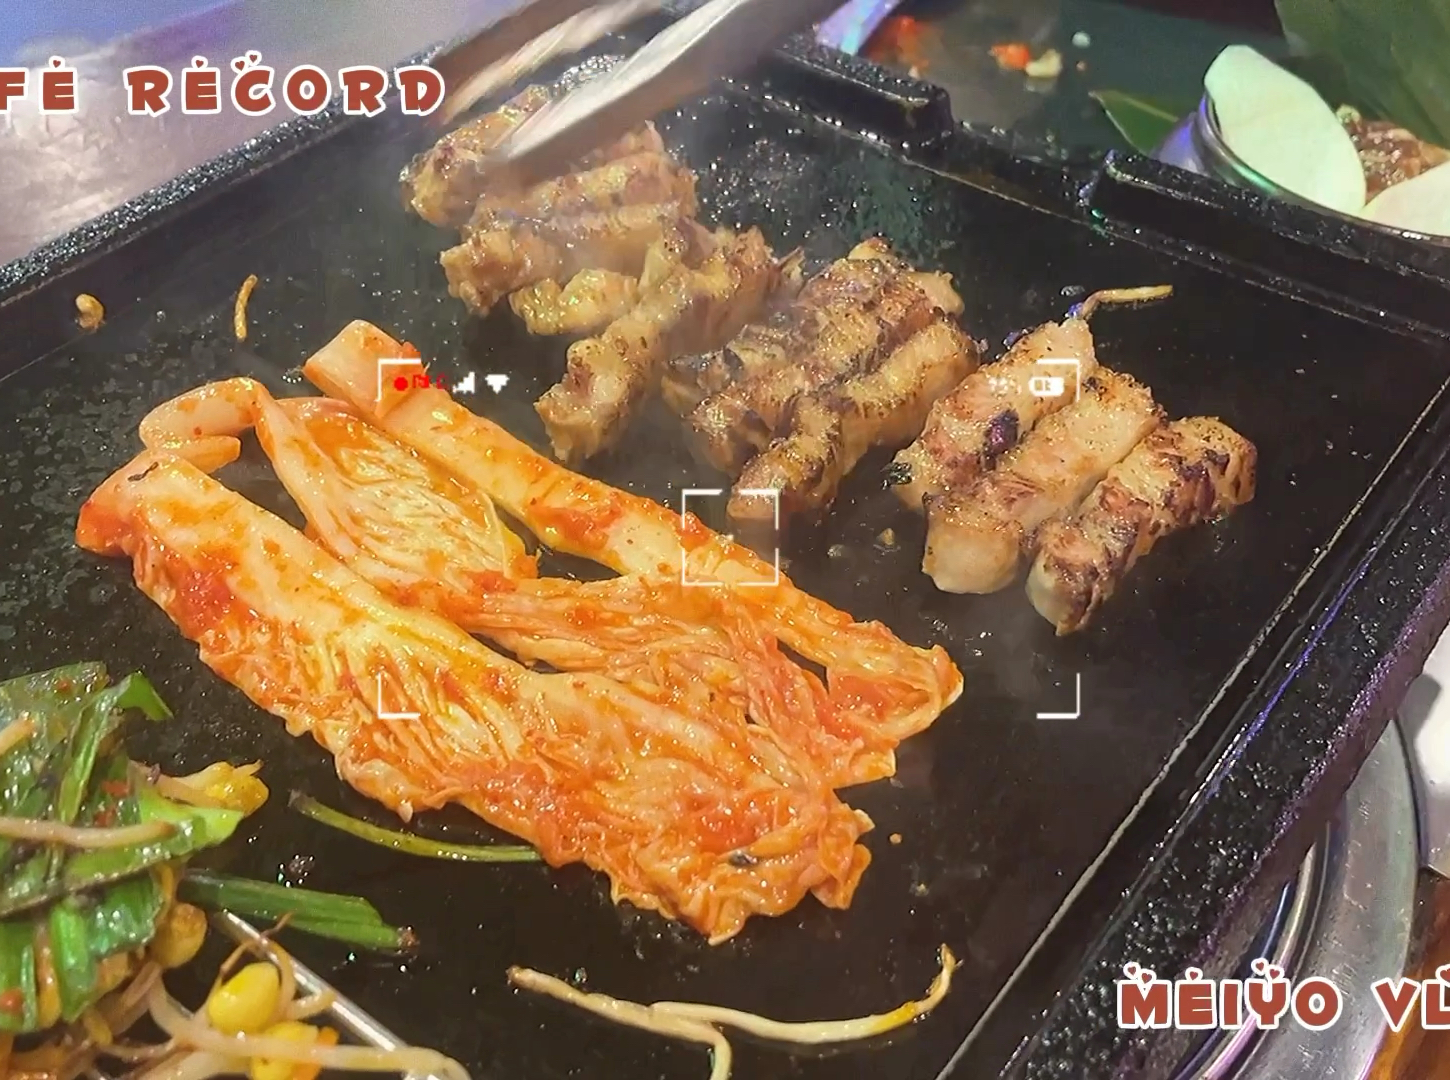 ❗️问了深圳的5个韩国人都说正宗的韩国烤肉❗️青年火炉烤肉